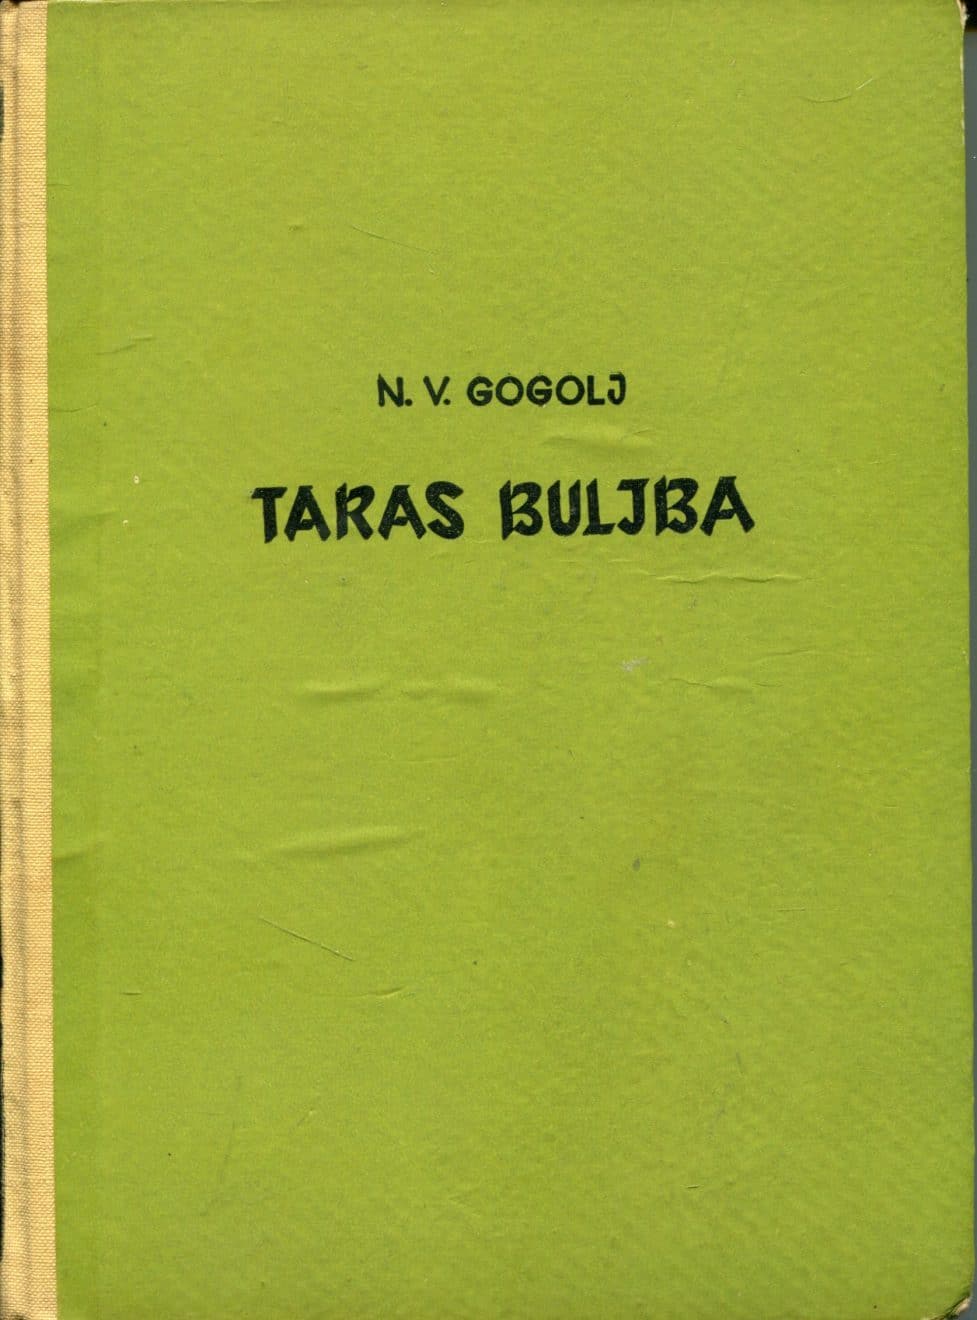 Taras Buljba Gogolj Nikolai Vasilyevich